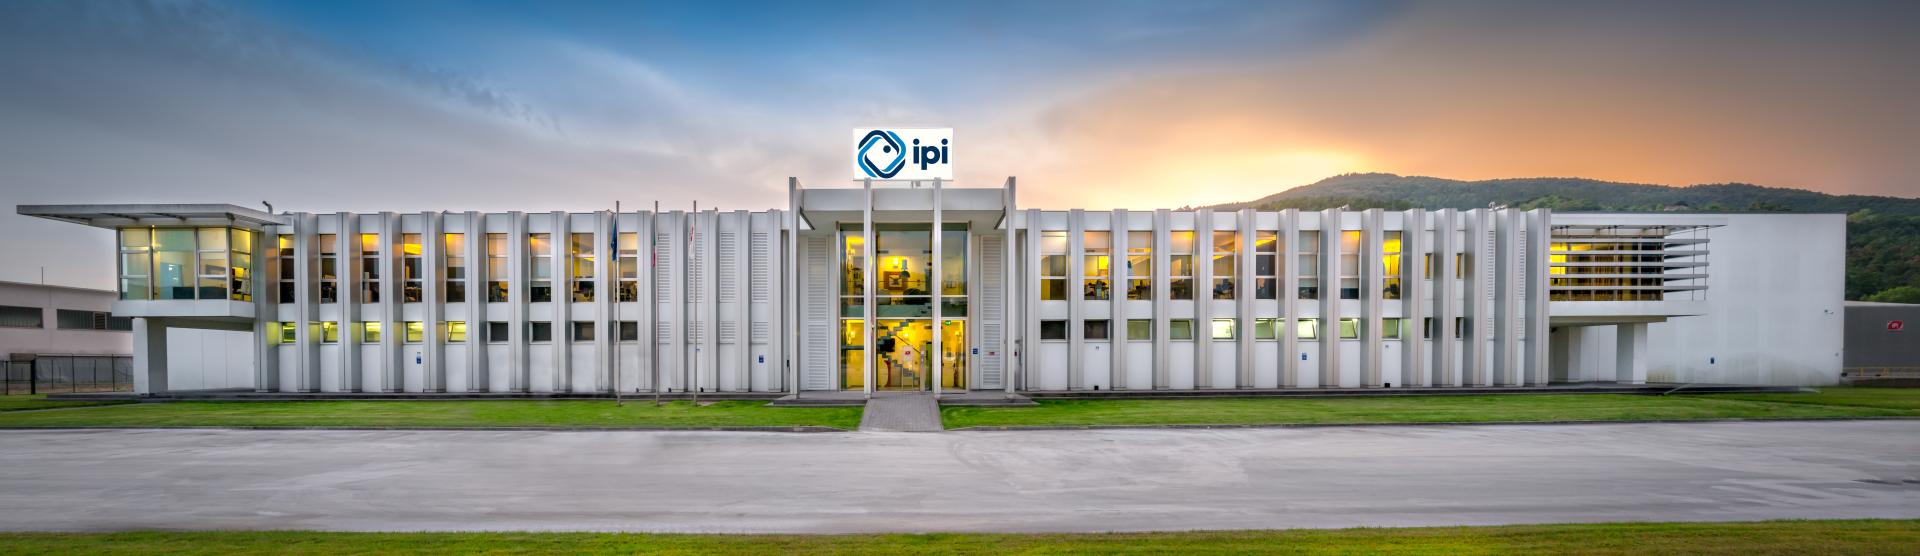 IPI Converting Plant